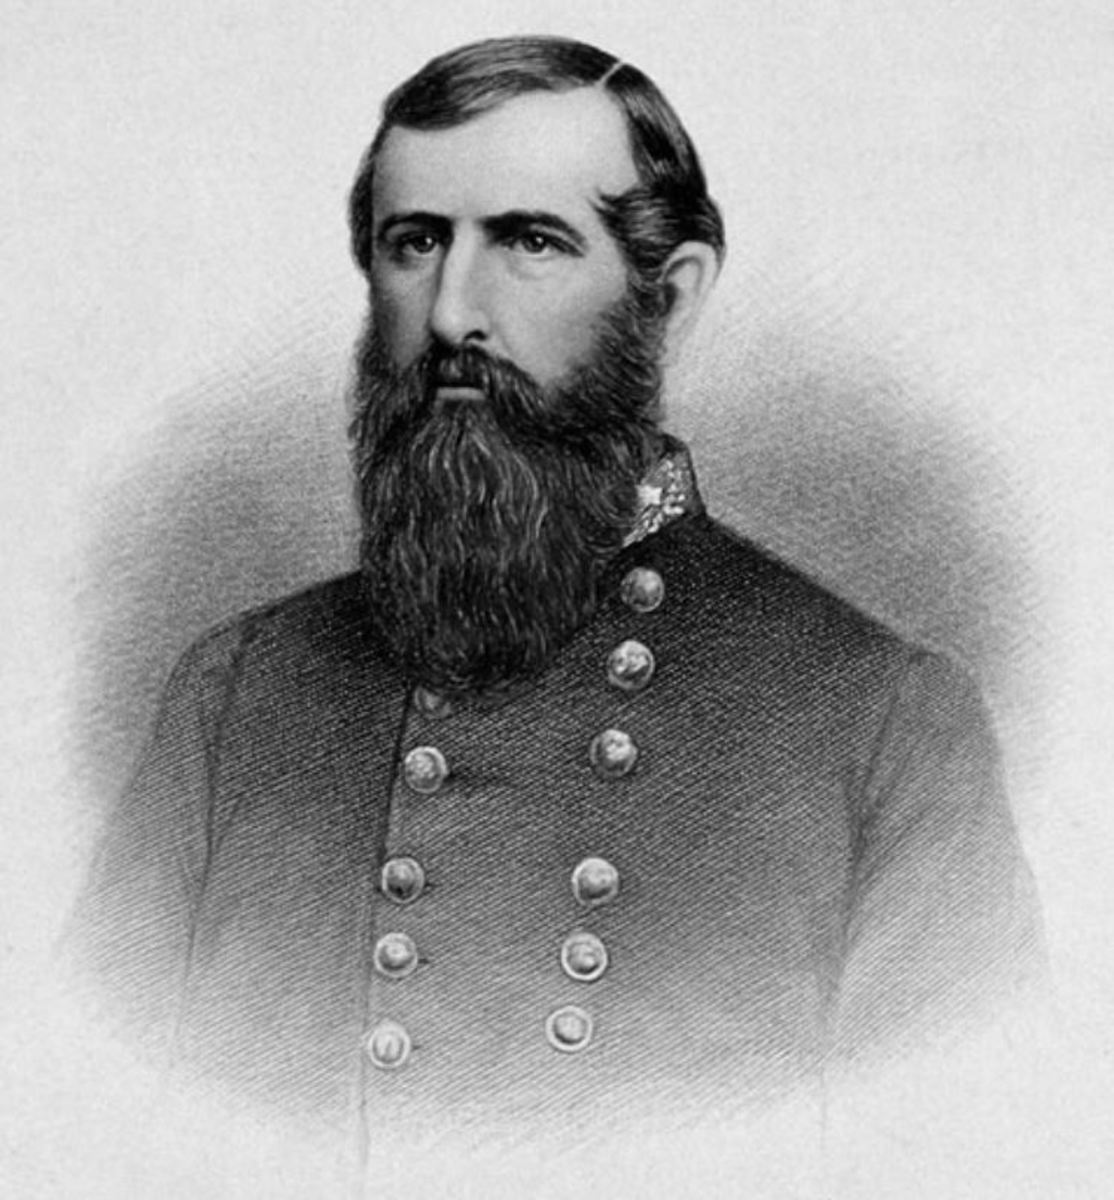 Confederate General John C. Pemberton